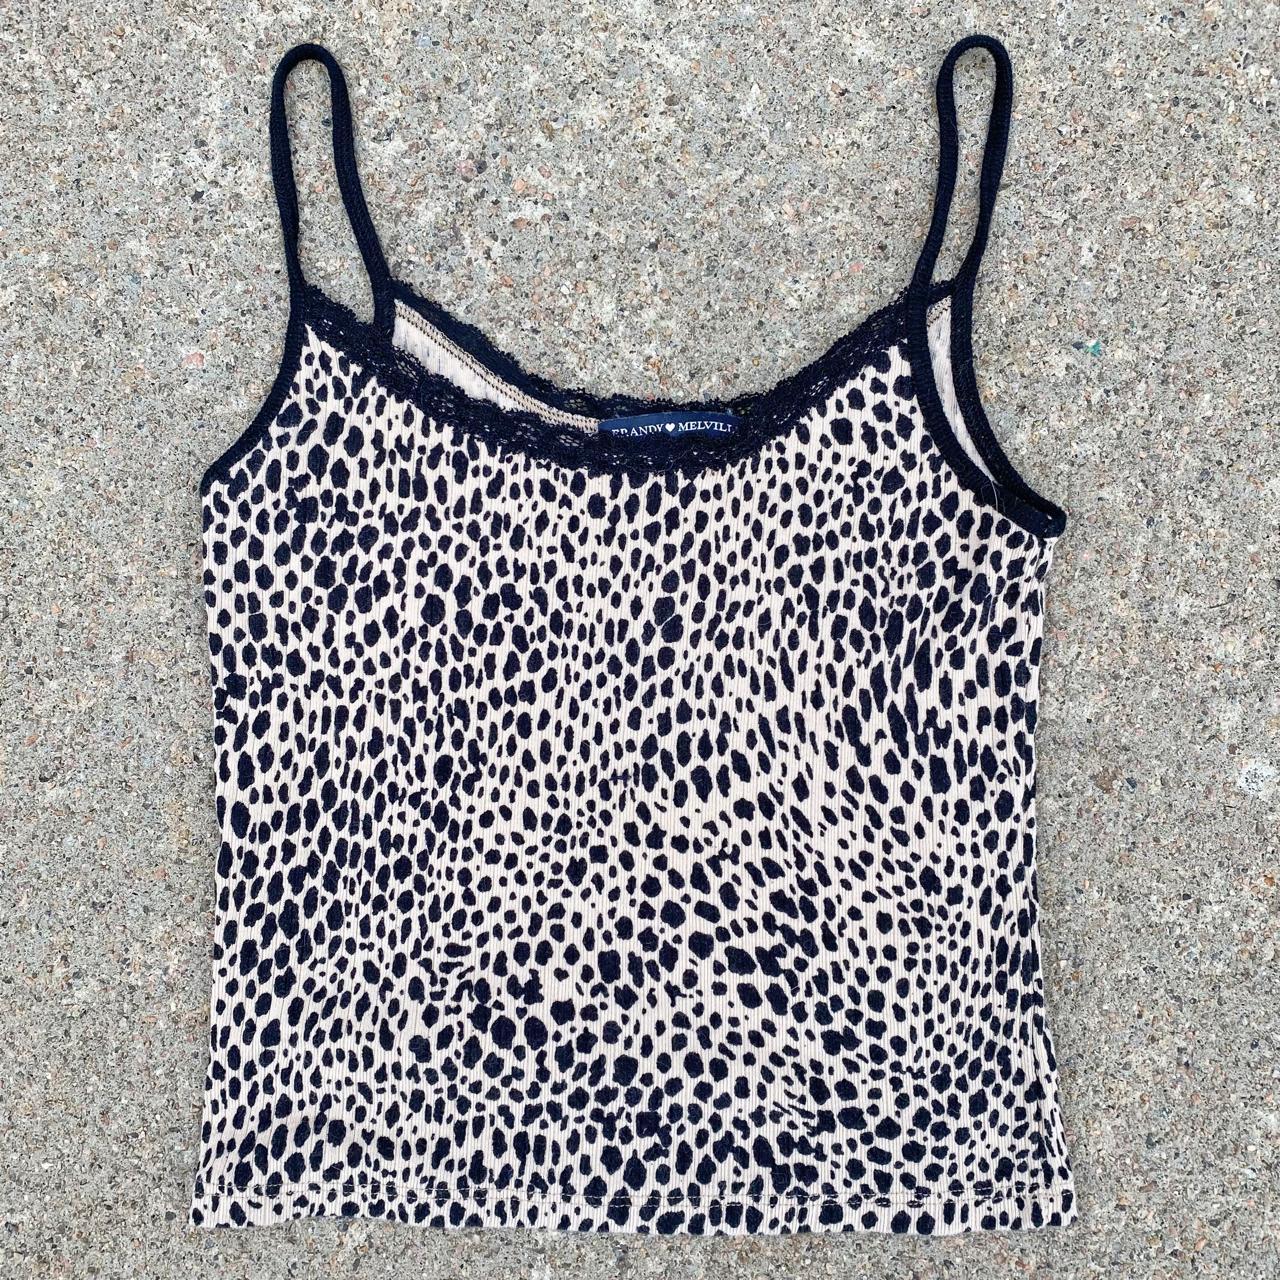 Brandy Melville Cheetah Animal Print Lace Cami... - Depop